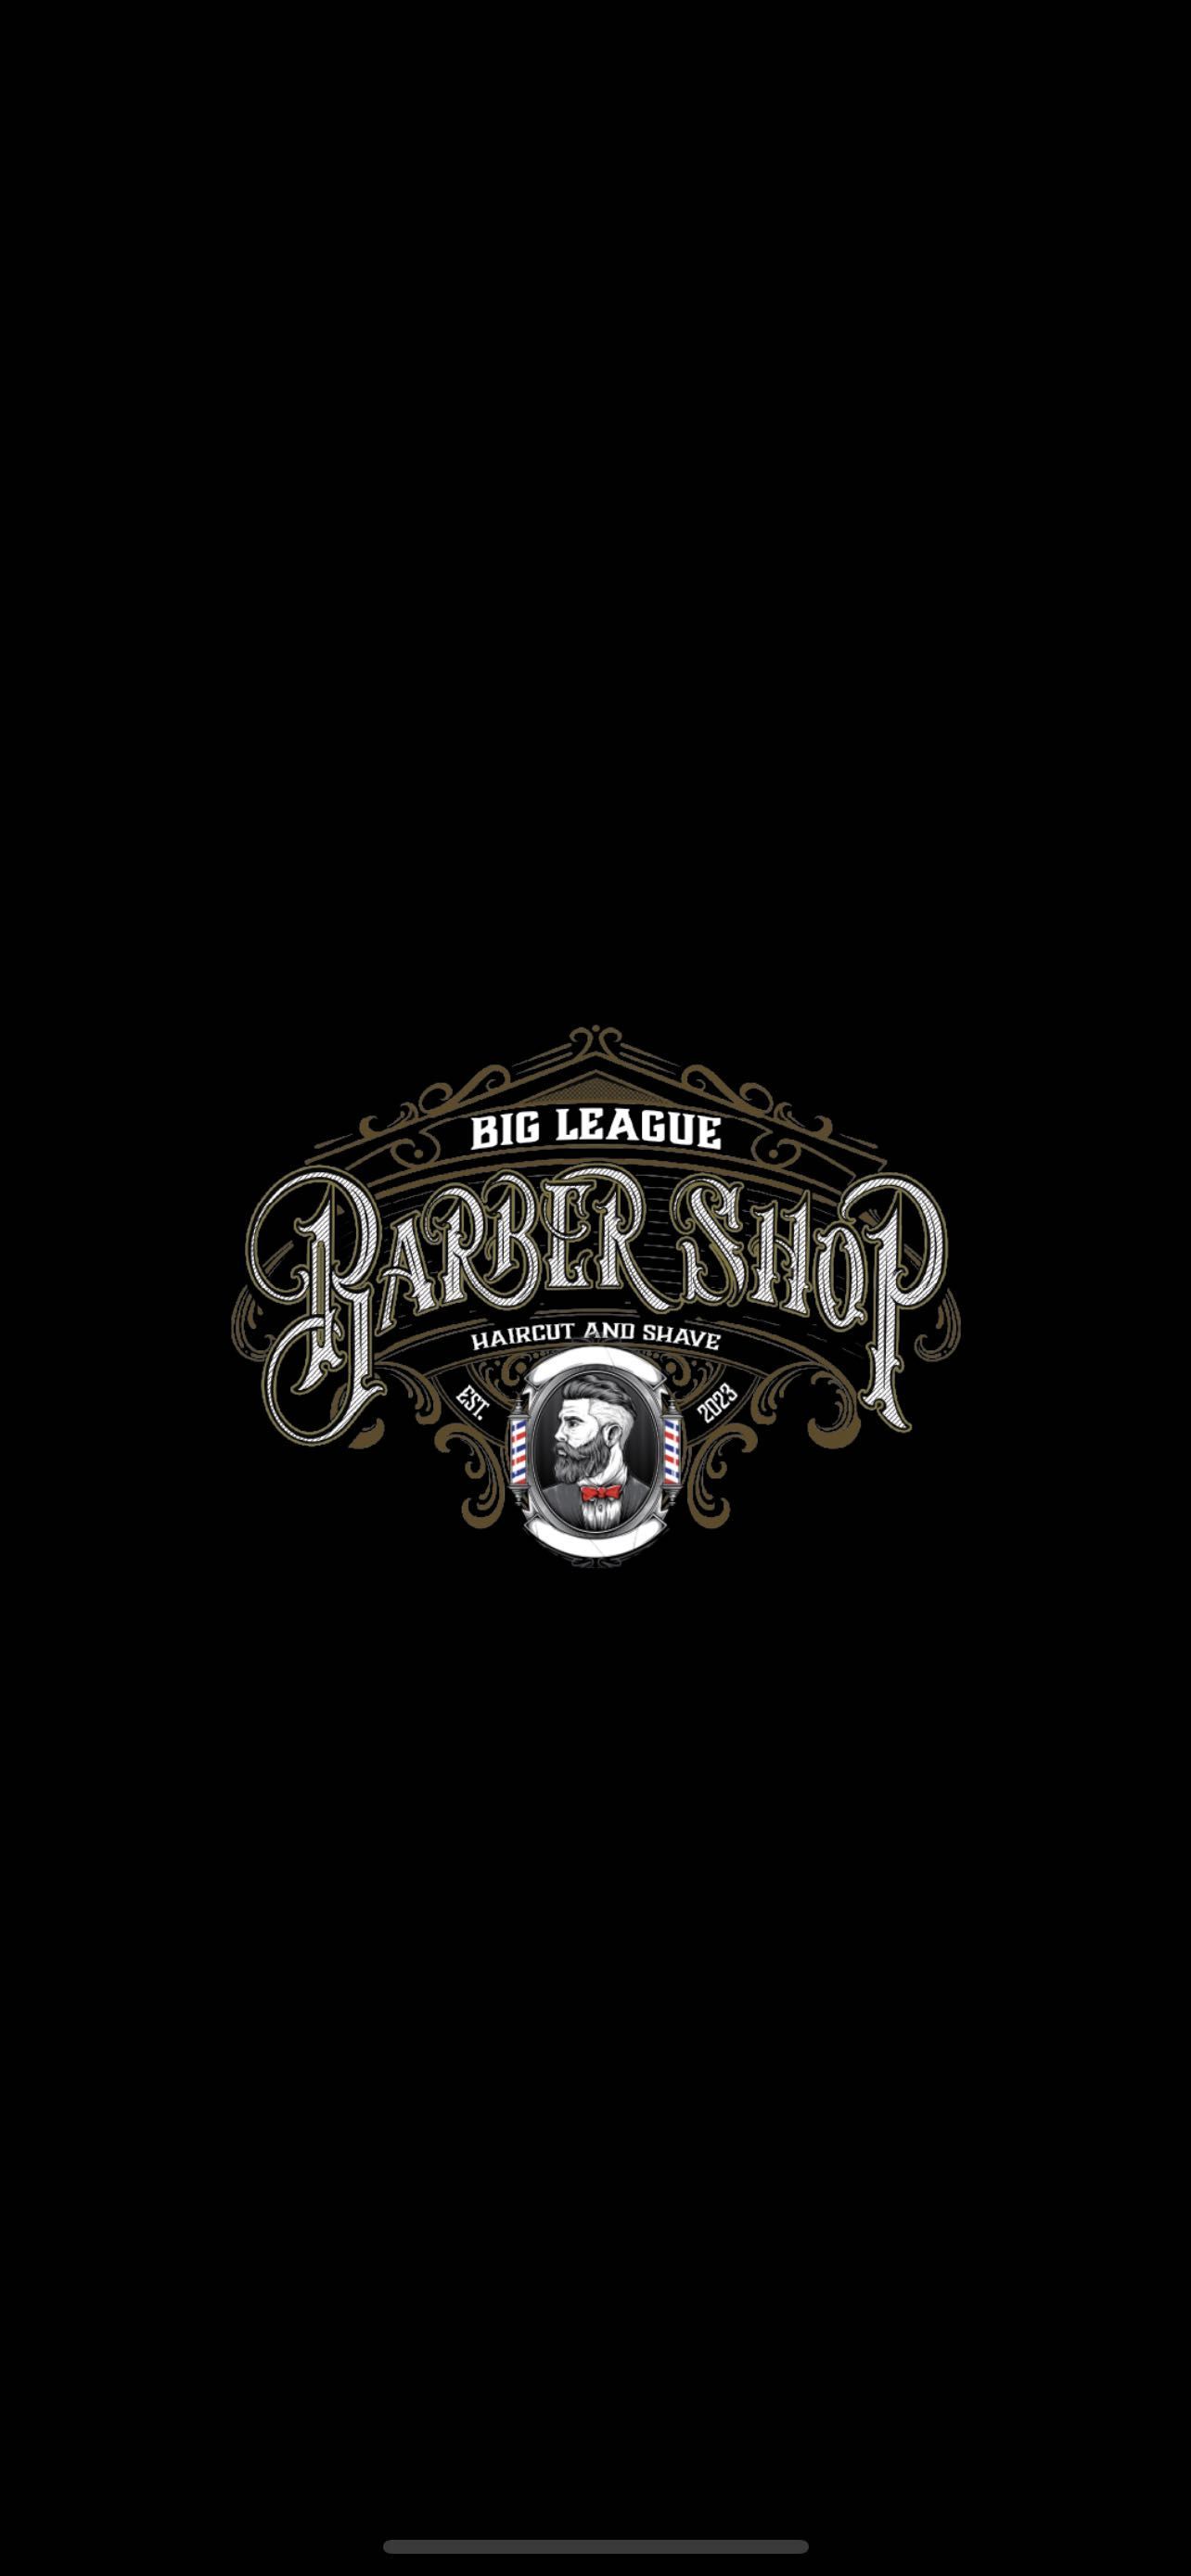 Big league Barbershop, 312 E Harrison St, Tampa, 33602